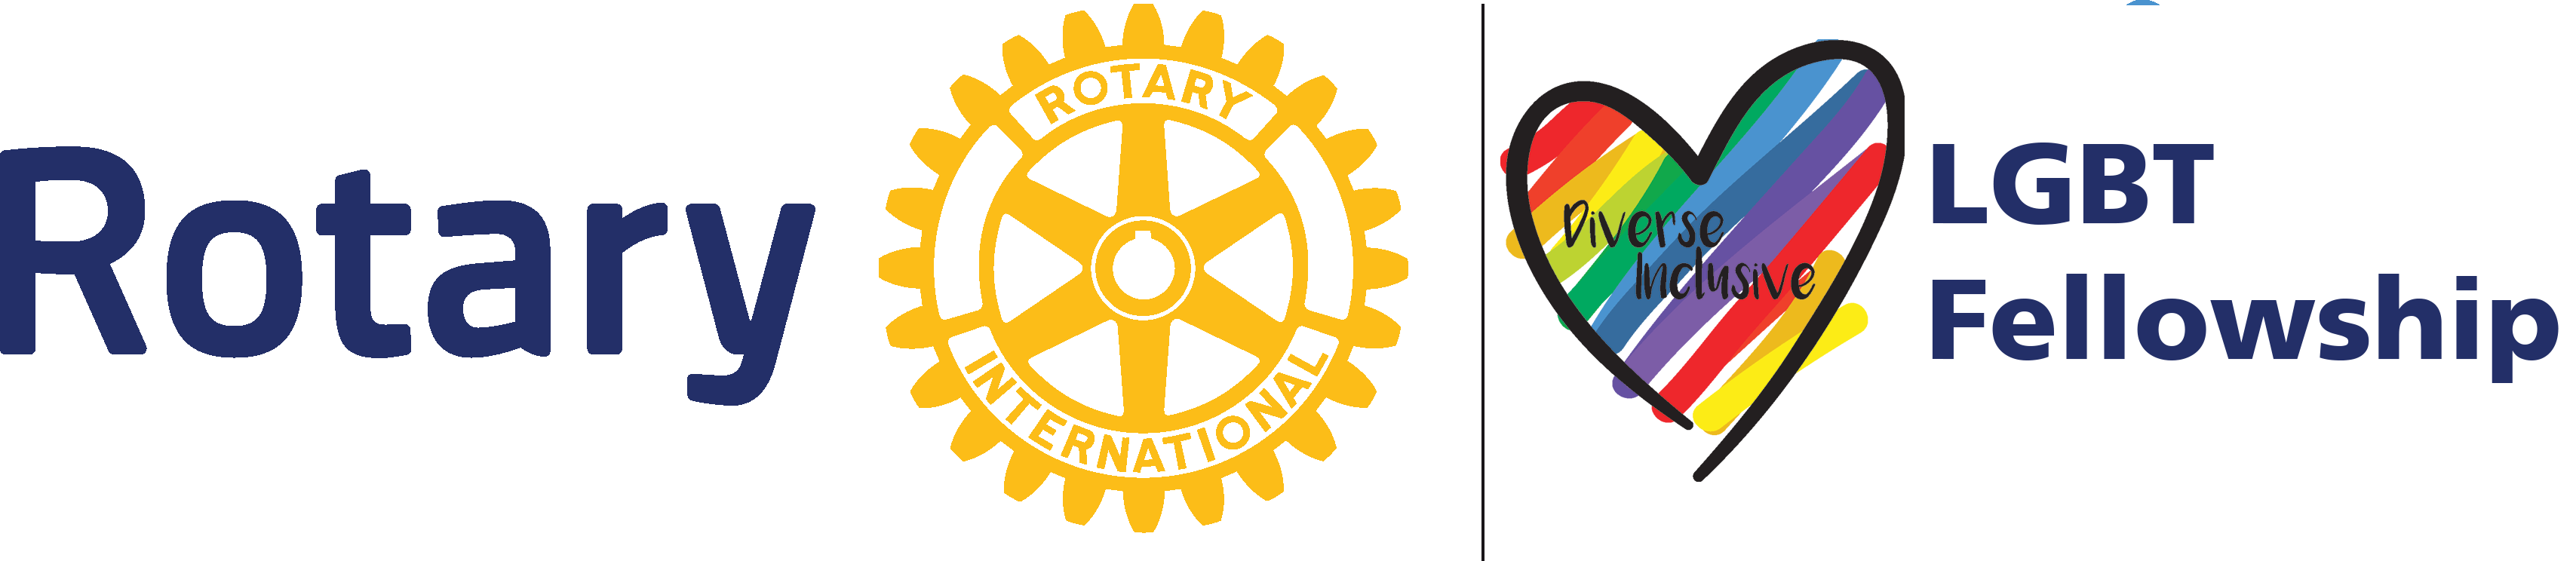 Rotary LGBT Fellowship